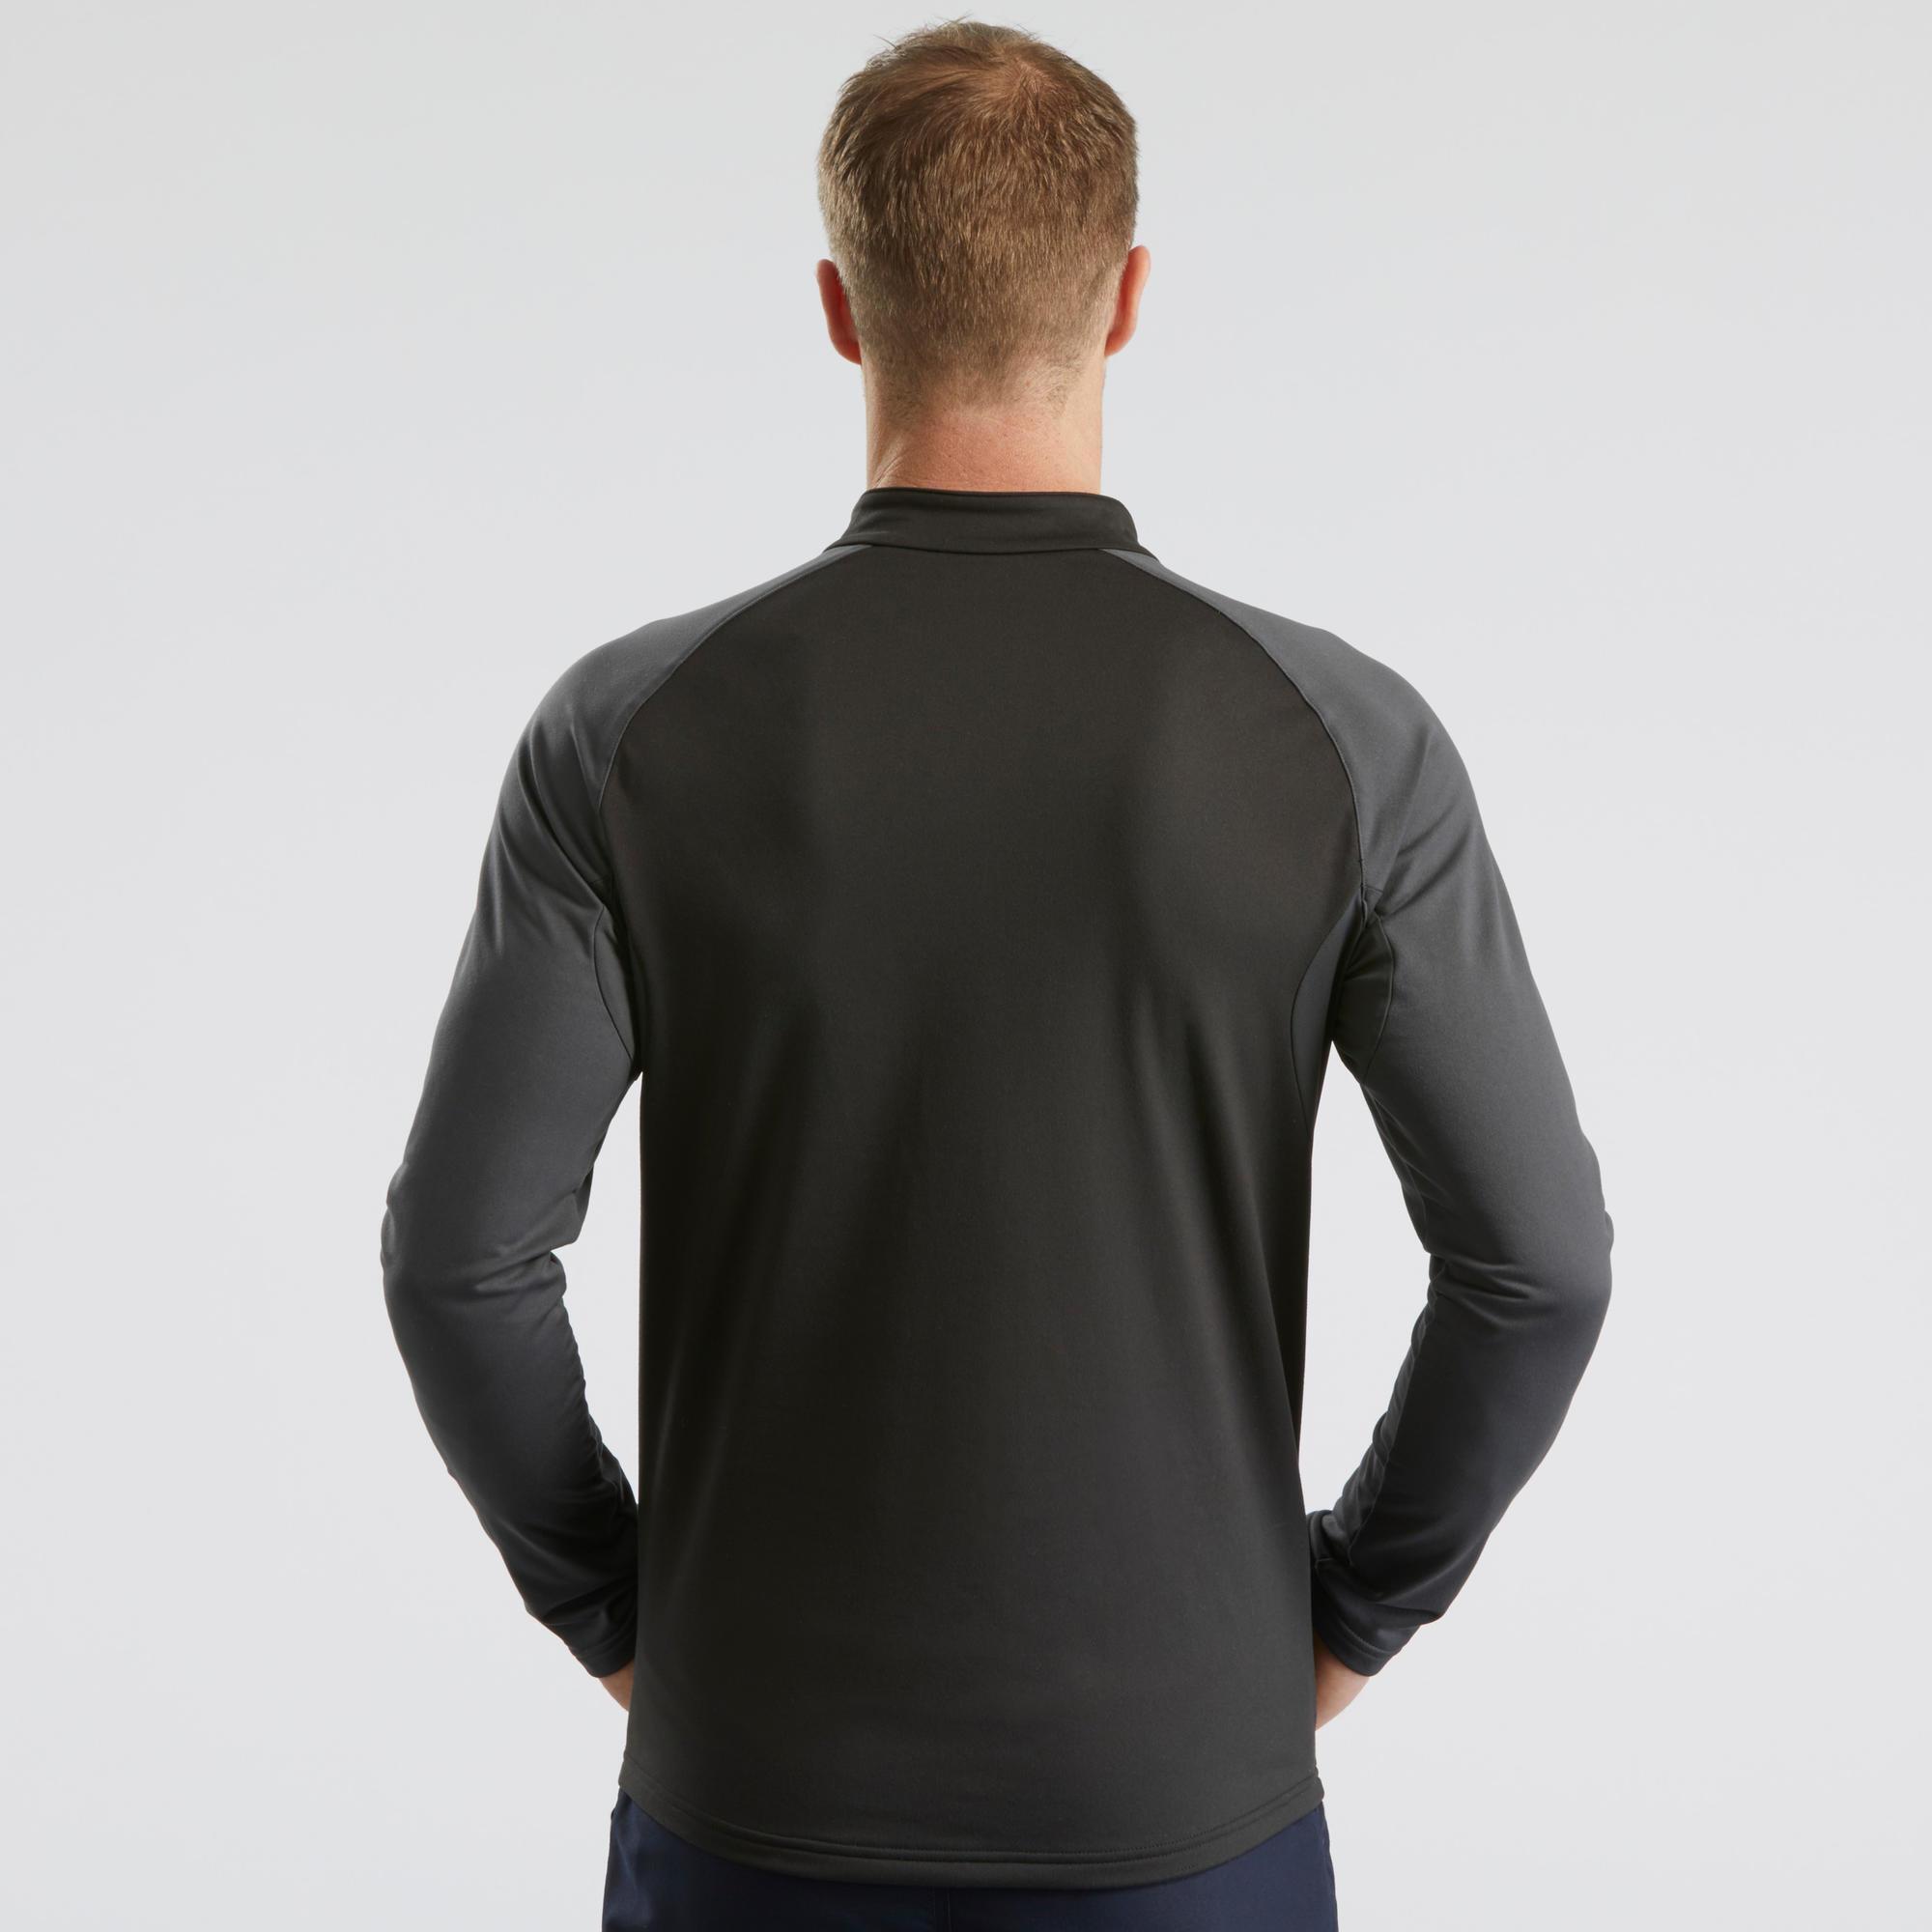 Men’s Long-sleeved Warm Hiking T-shirt - SH100 4/4